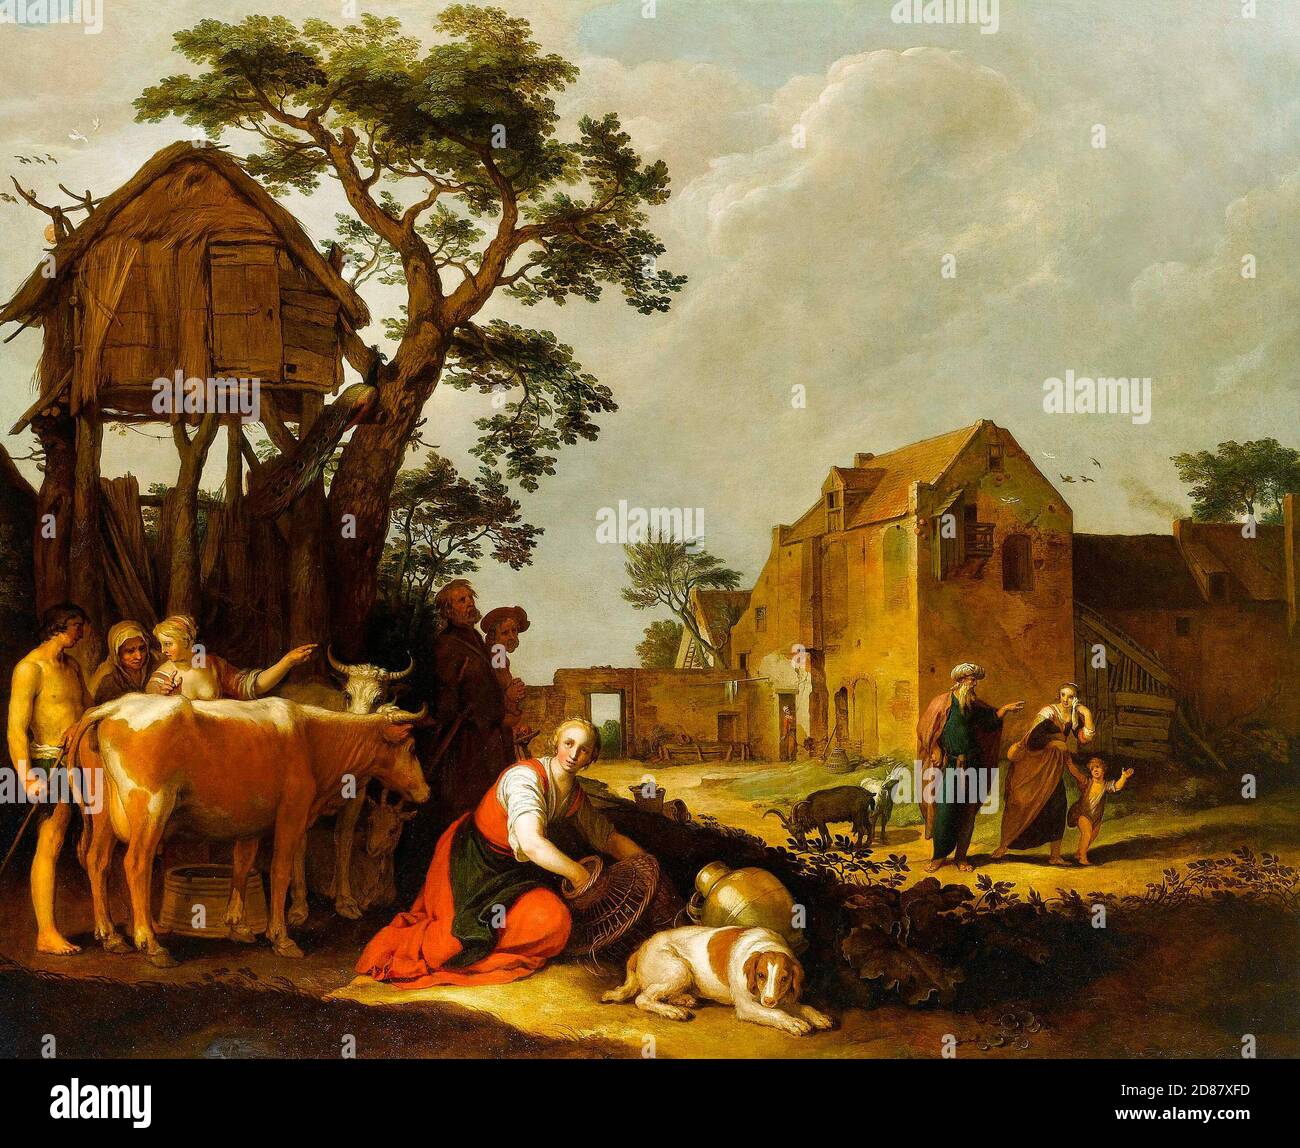 The Expulsion of Hagar and Ishmael - Abraham Bloemaert, 1600s Stock Photo